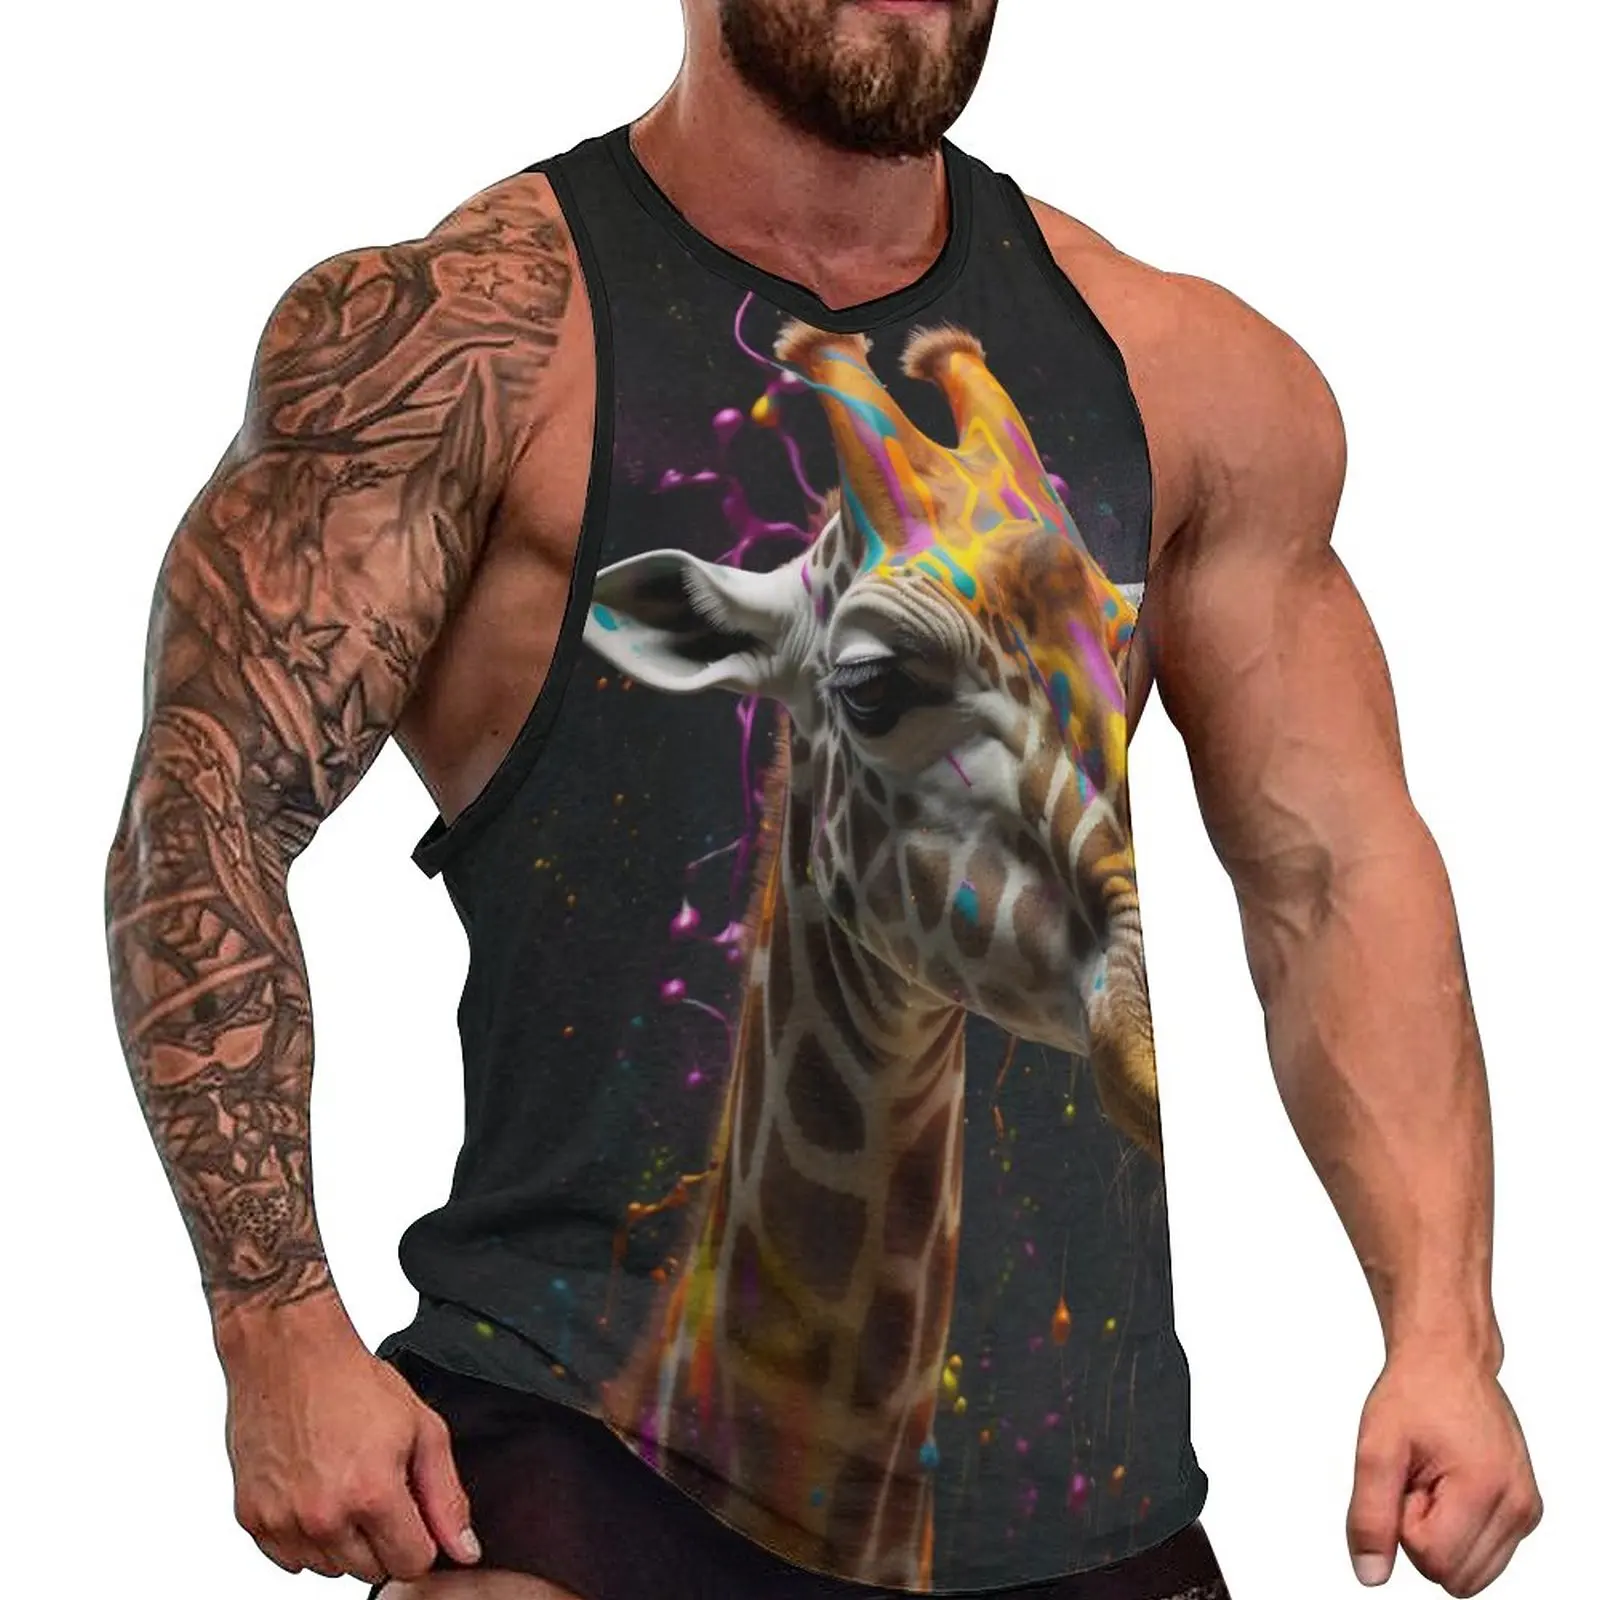 

Giraffe Tank Top Explosion Liquid Splash Muscle Tops Summer Training Male Design Sleeveless Shirts Plus Size